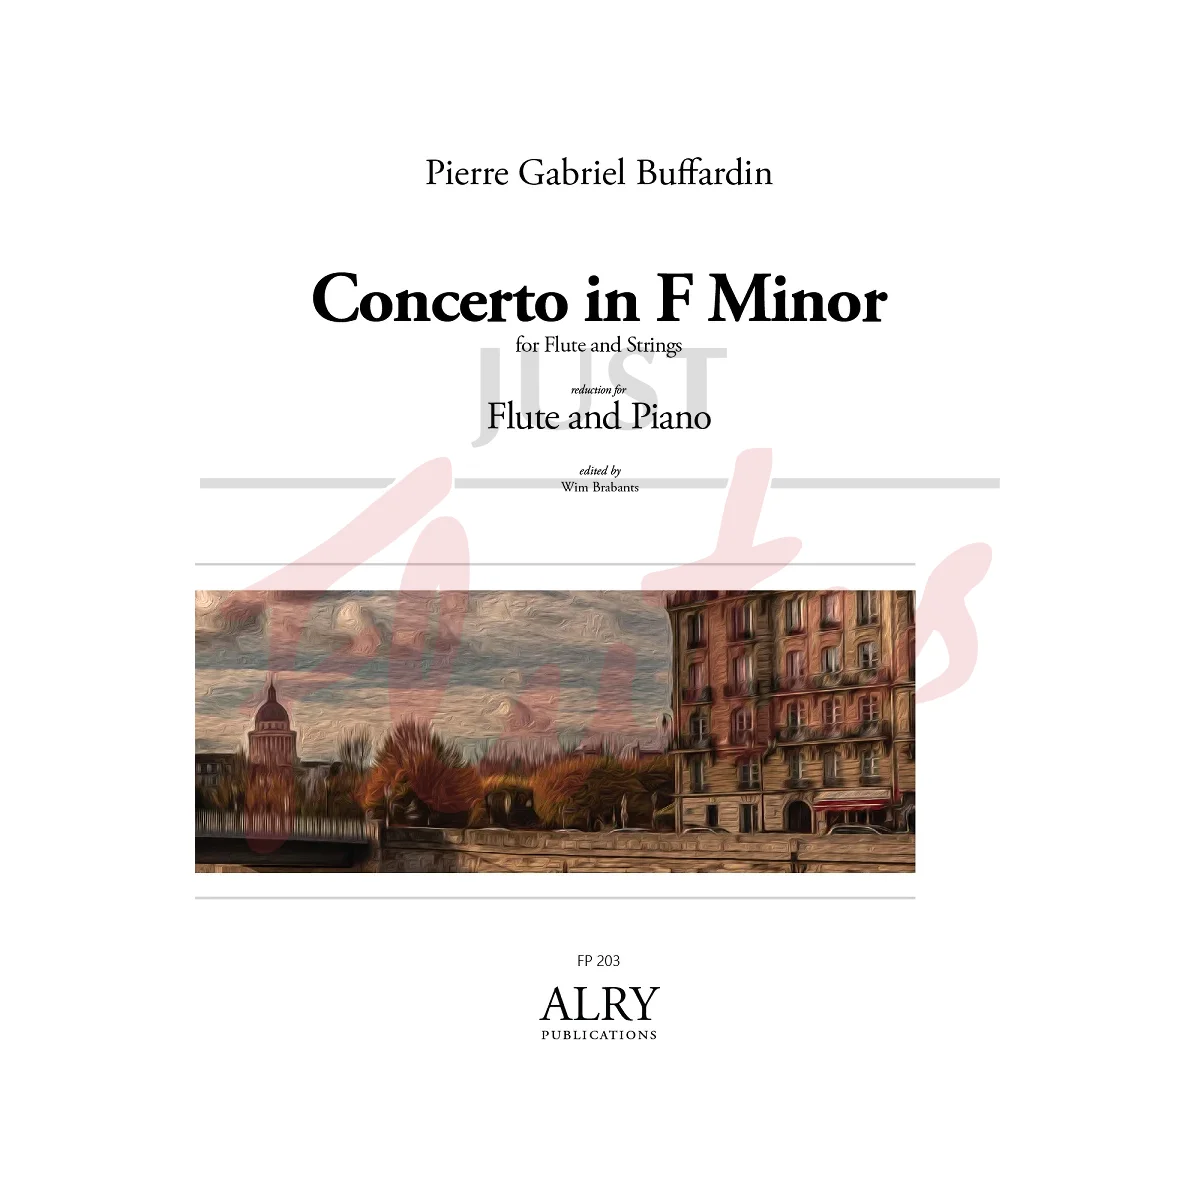 Concerto in F minor for Flute and Piano